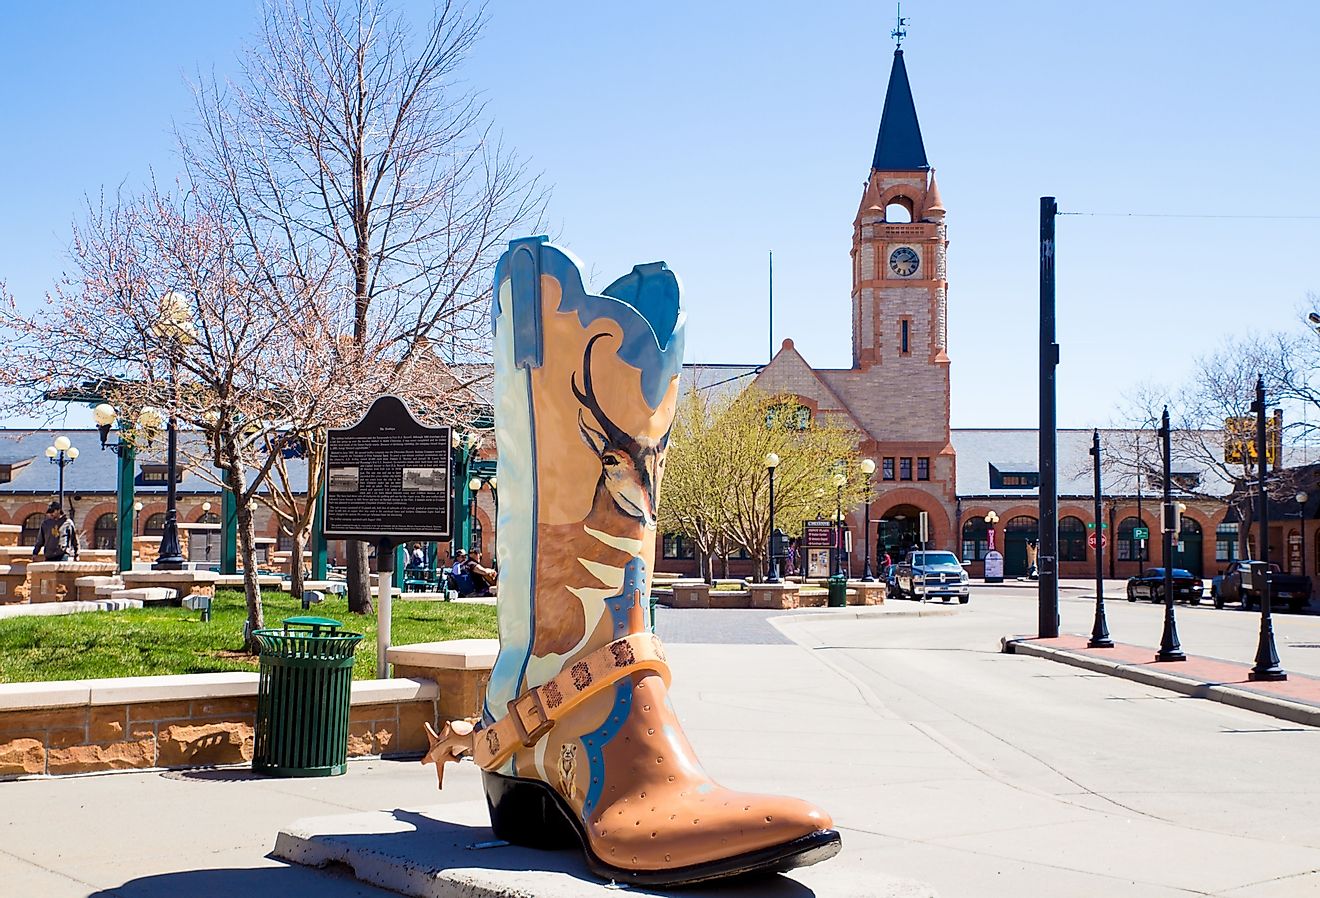 Historic downtown Cheyenne, Wyoming. Image credit littlenySTOCK via Shutterstock